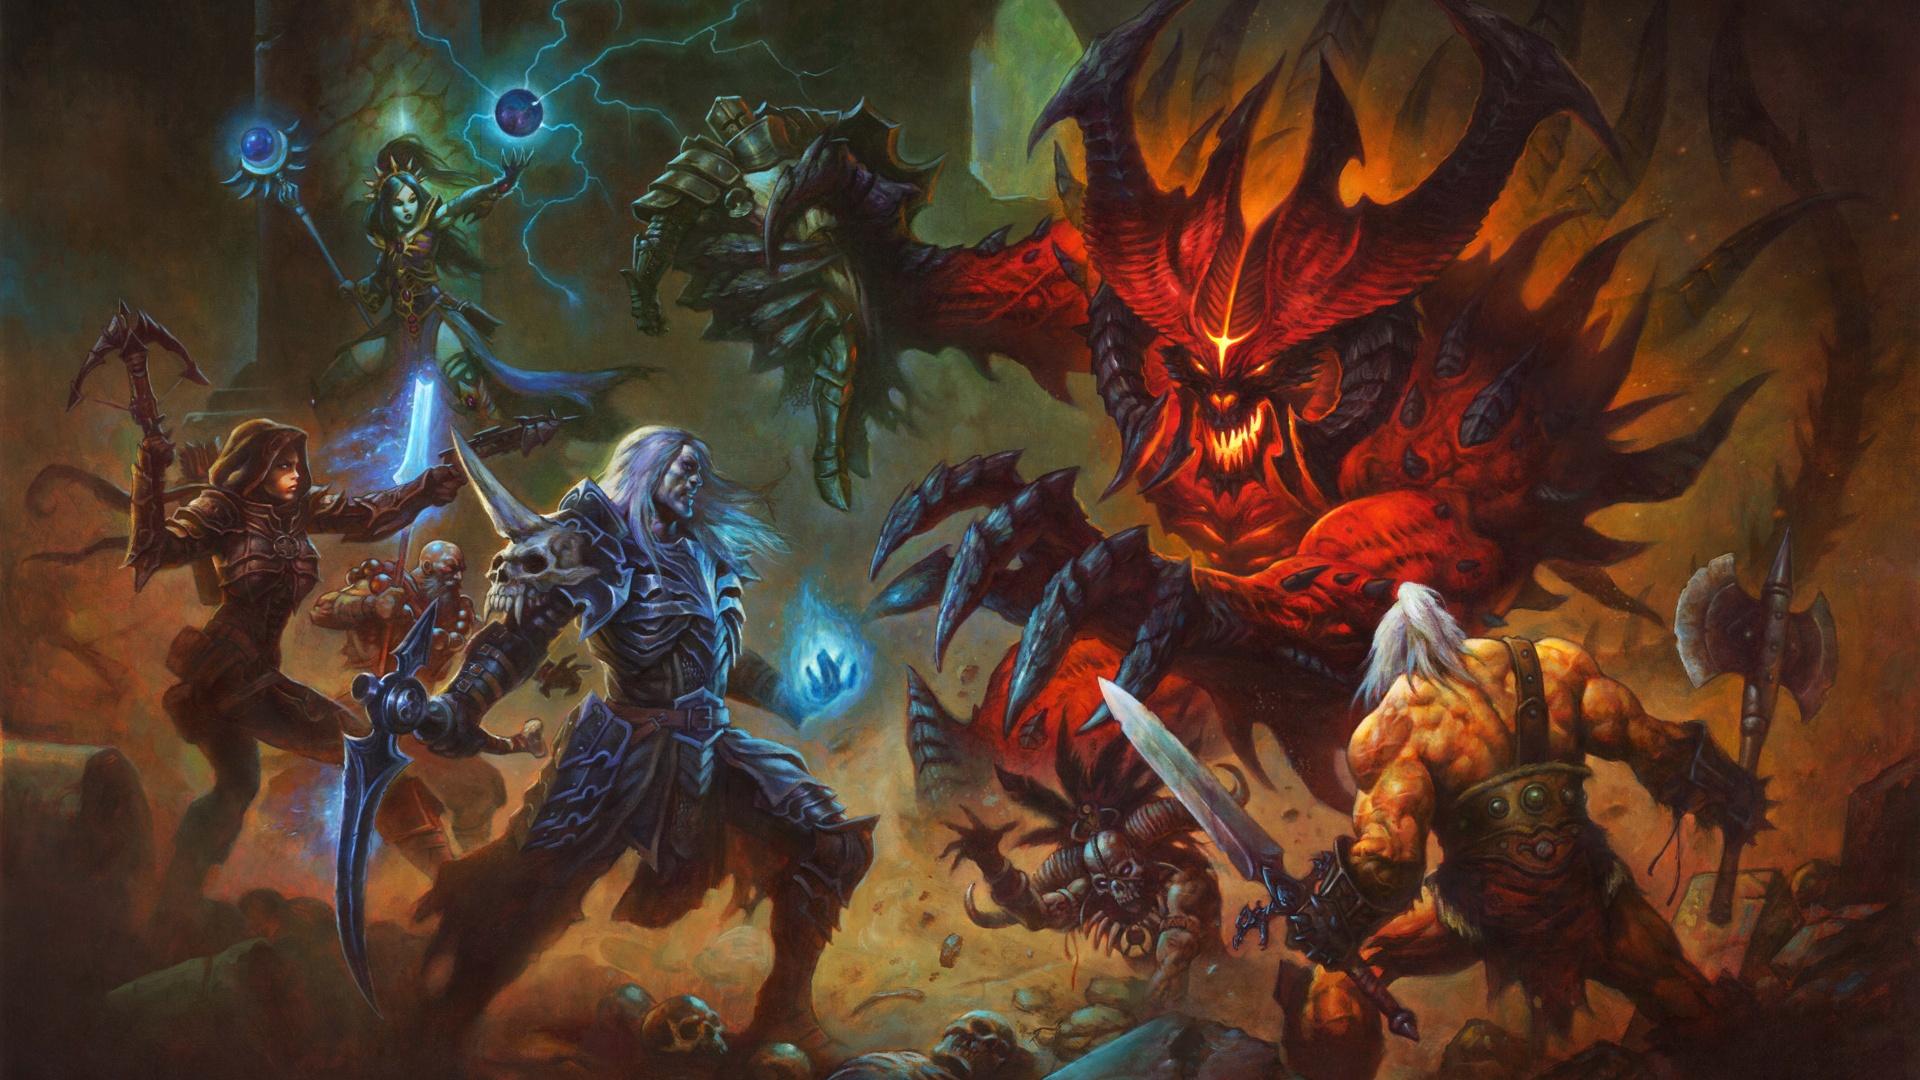 Diablo vs necromancer party Wallpaper from Diablo III: Rise